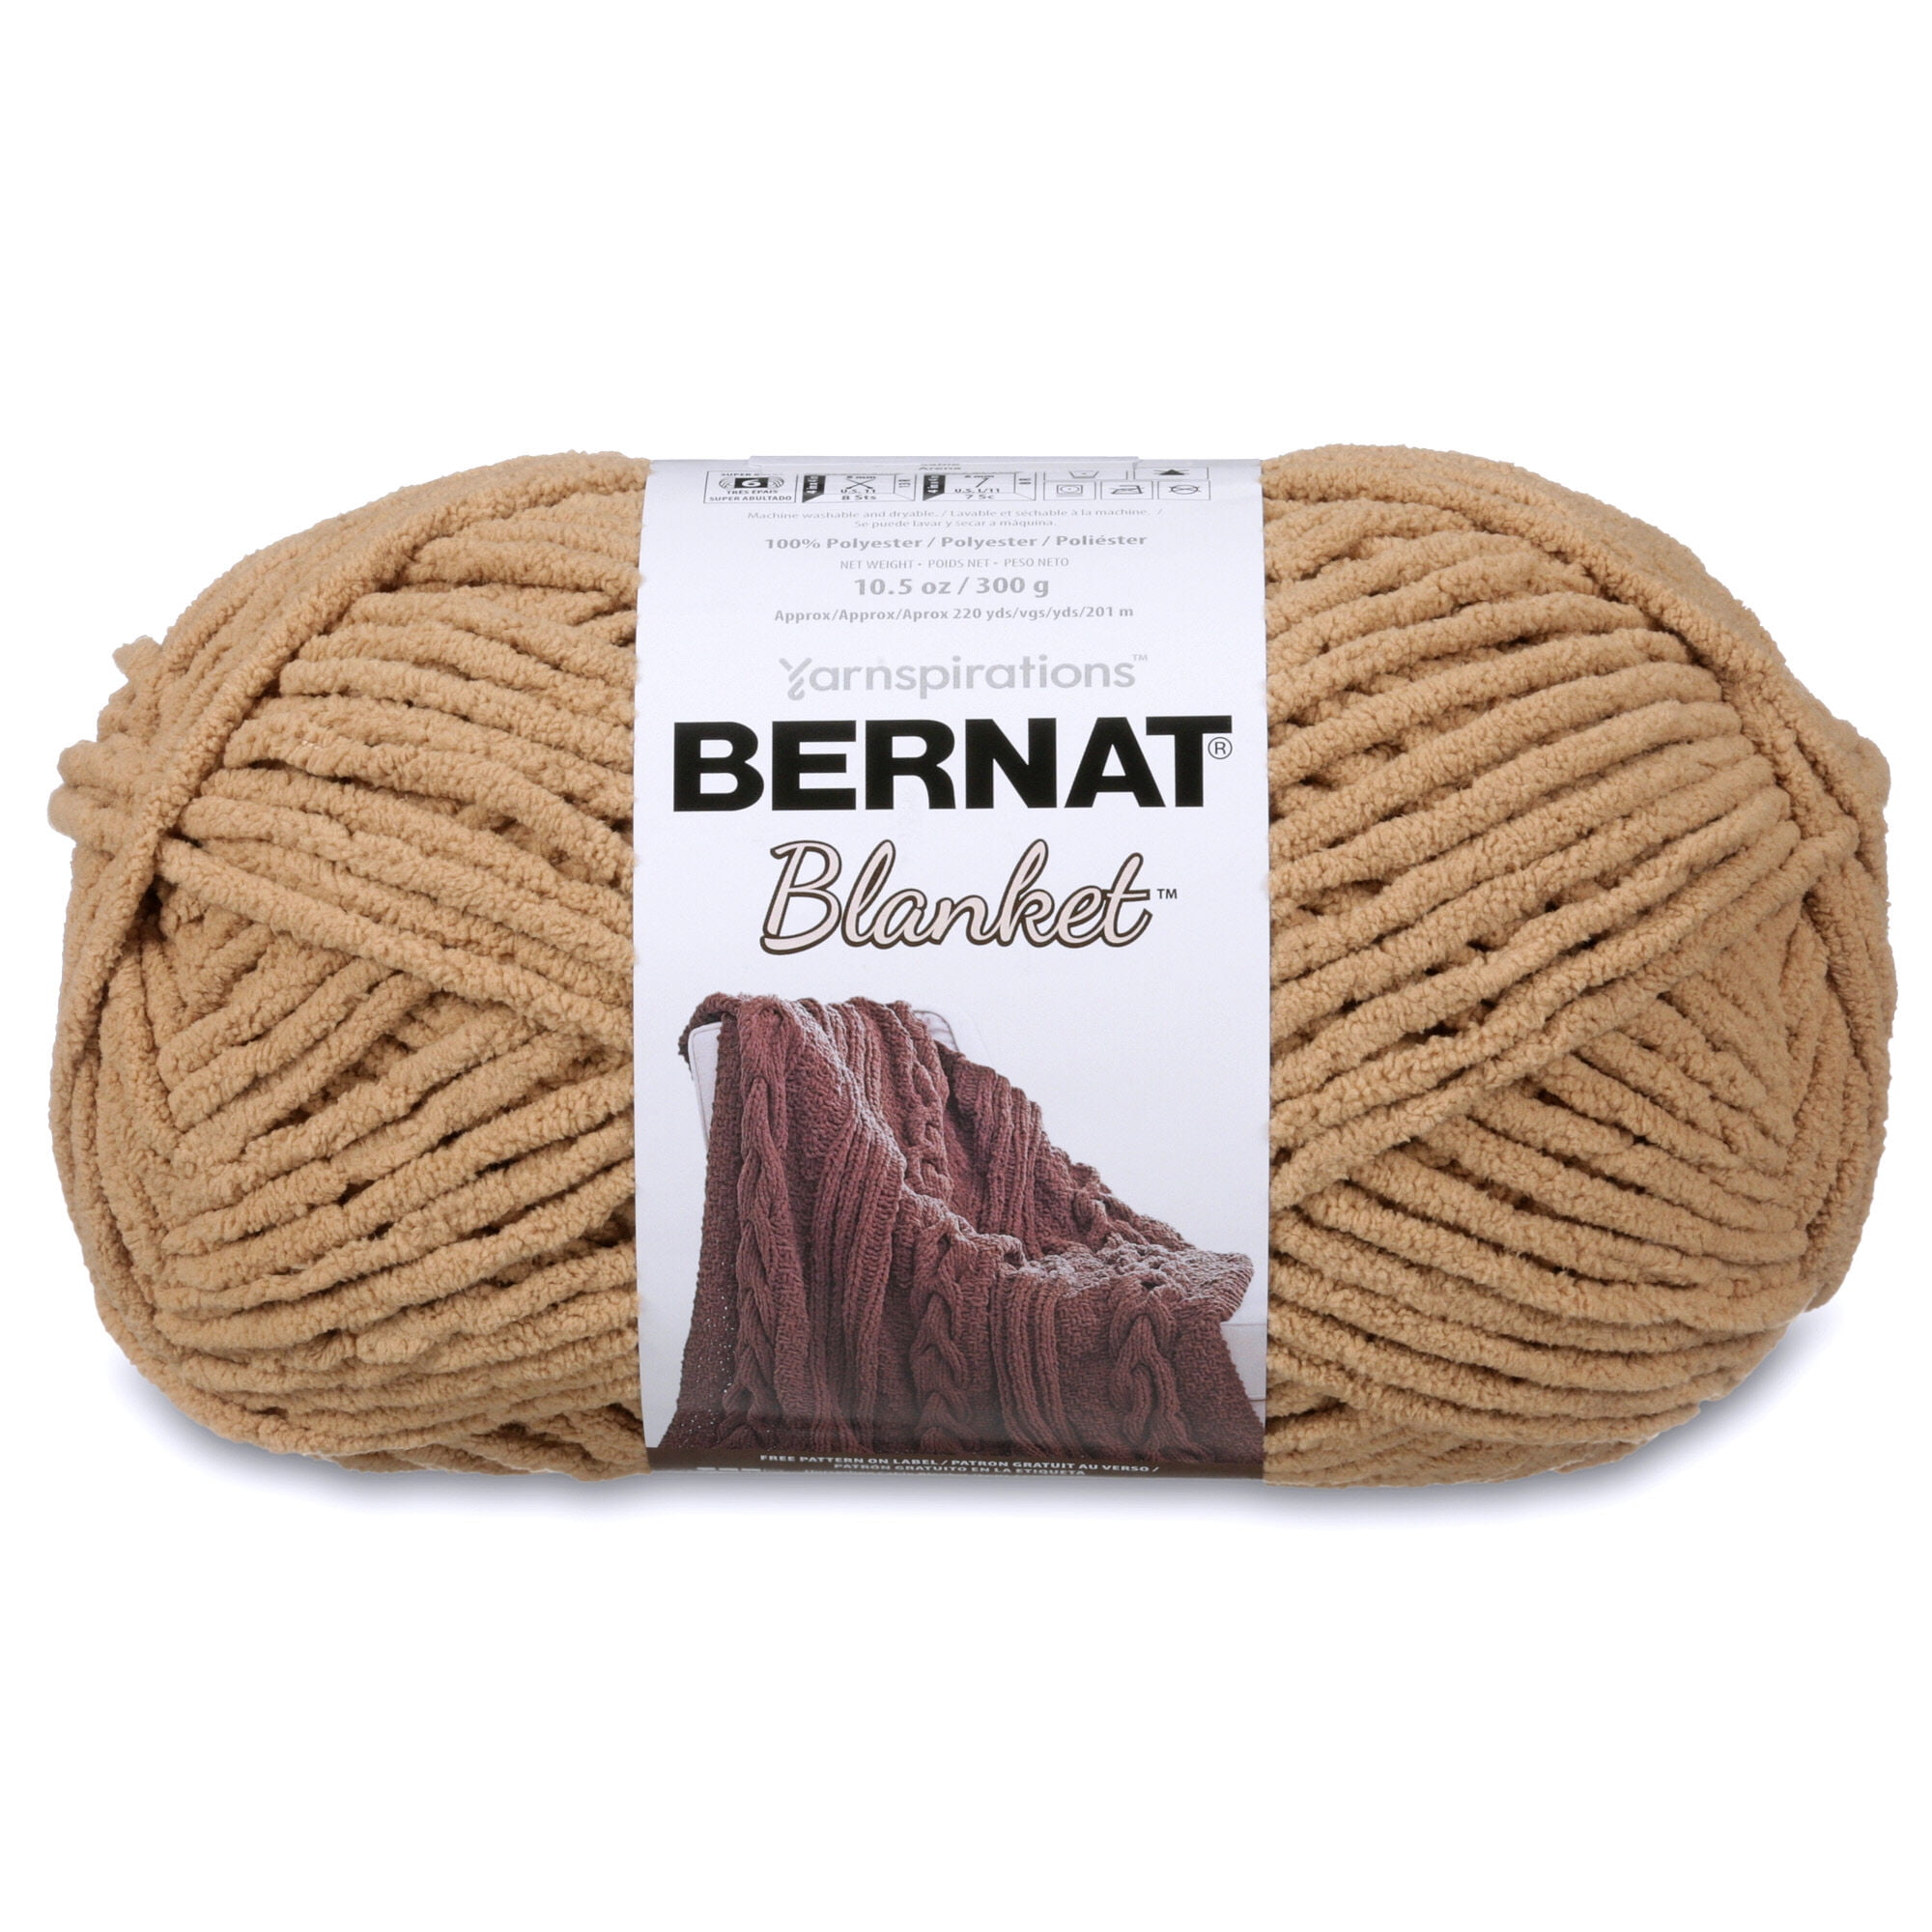 Bernat Blanket 6 Super Bulky Polyester Yarn, Sand 10.5oz/300g, 220